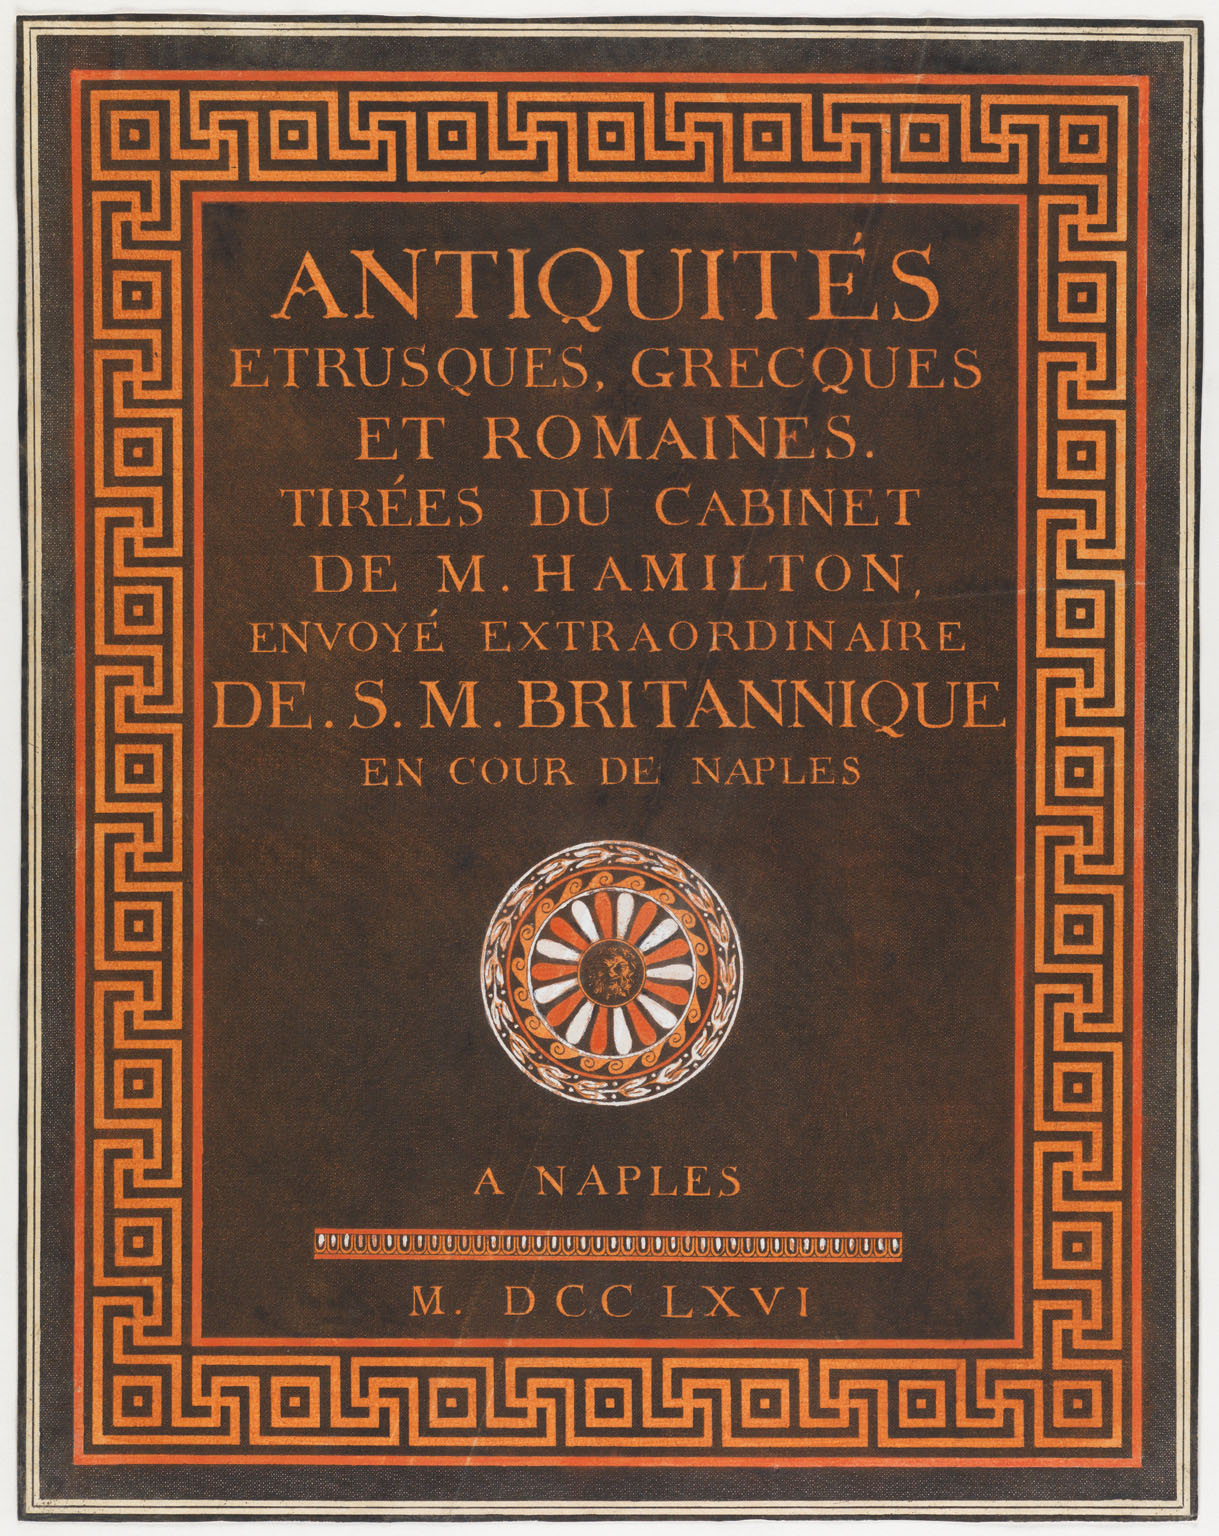 CLICK FOR LARGER IMAGE: Title page from Antiquités etrusques, grecques et romaines